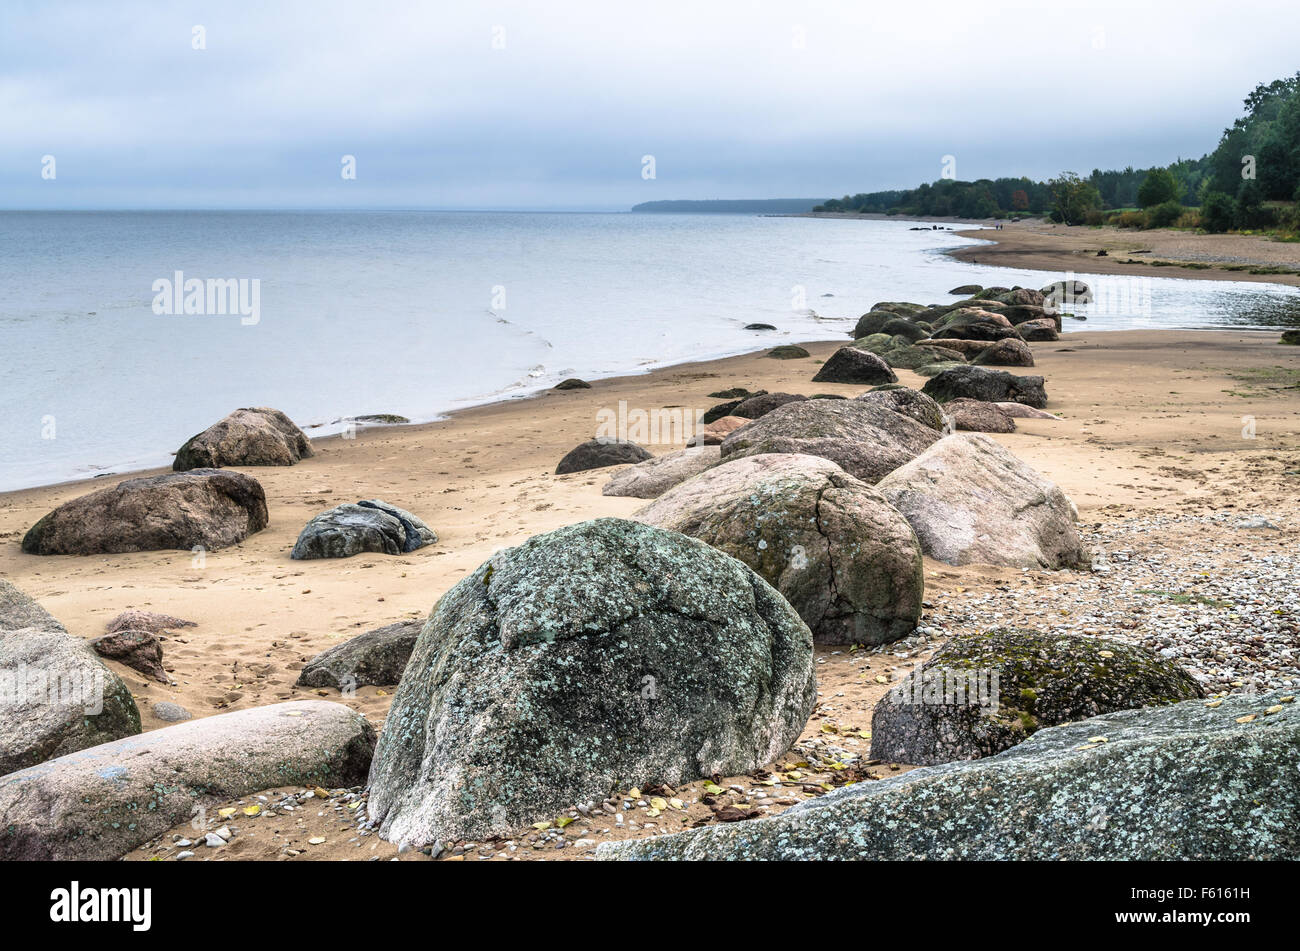 Plage de rochers sur le golfe de Finlande. Sillamae, Estonie Banque D'Images